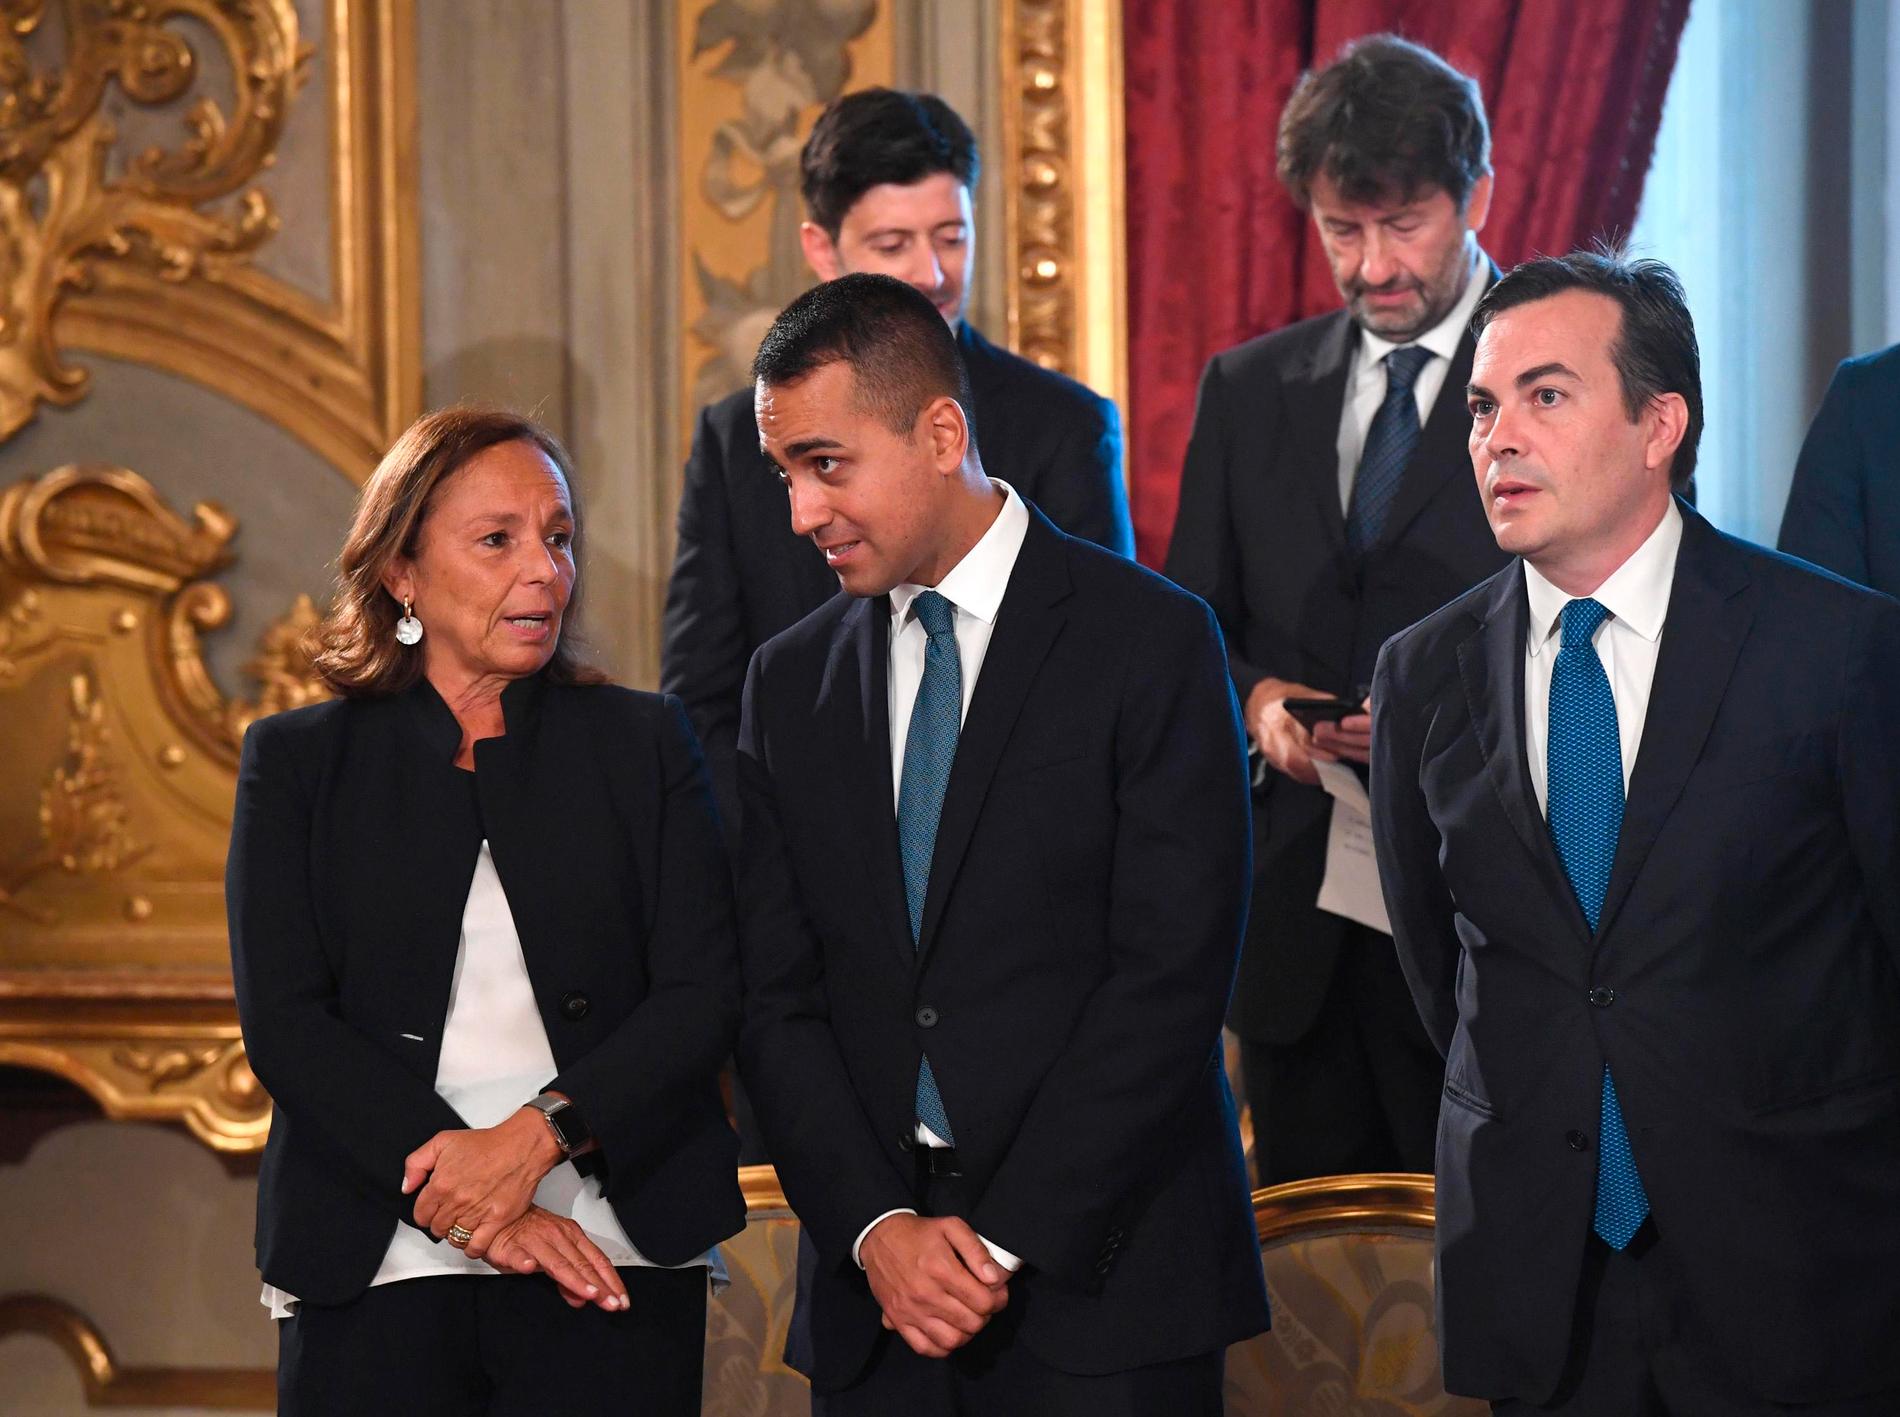 Luciana Lamorgese, ny inrikesminister, samtalar med utrikesministern Luigi di Maio under ceremonin i presidentpalatset.